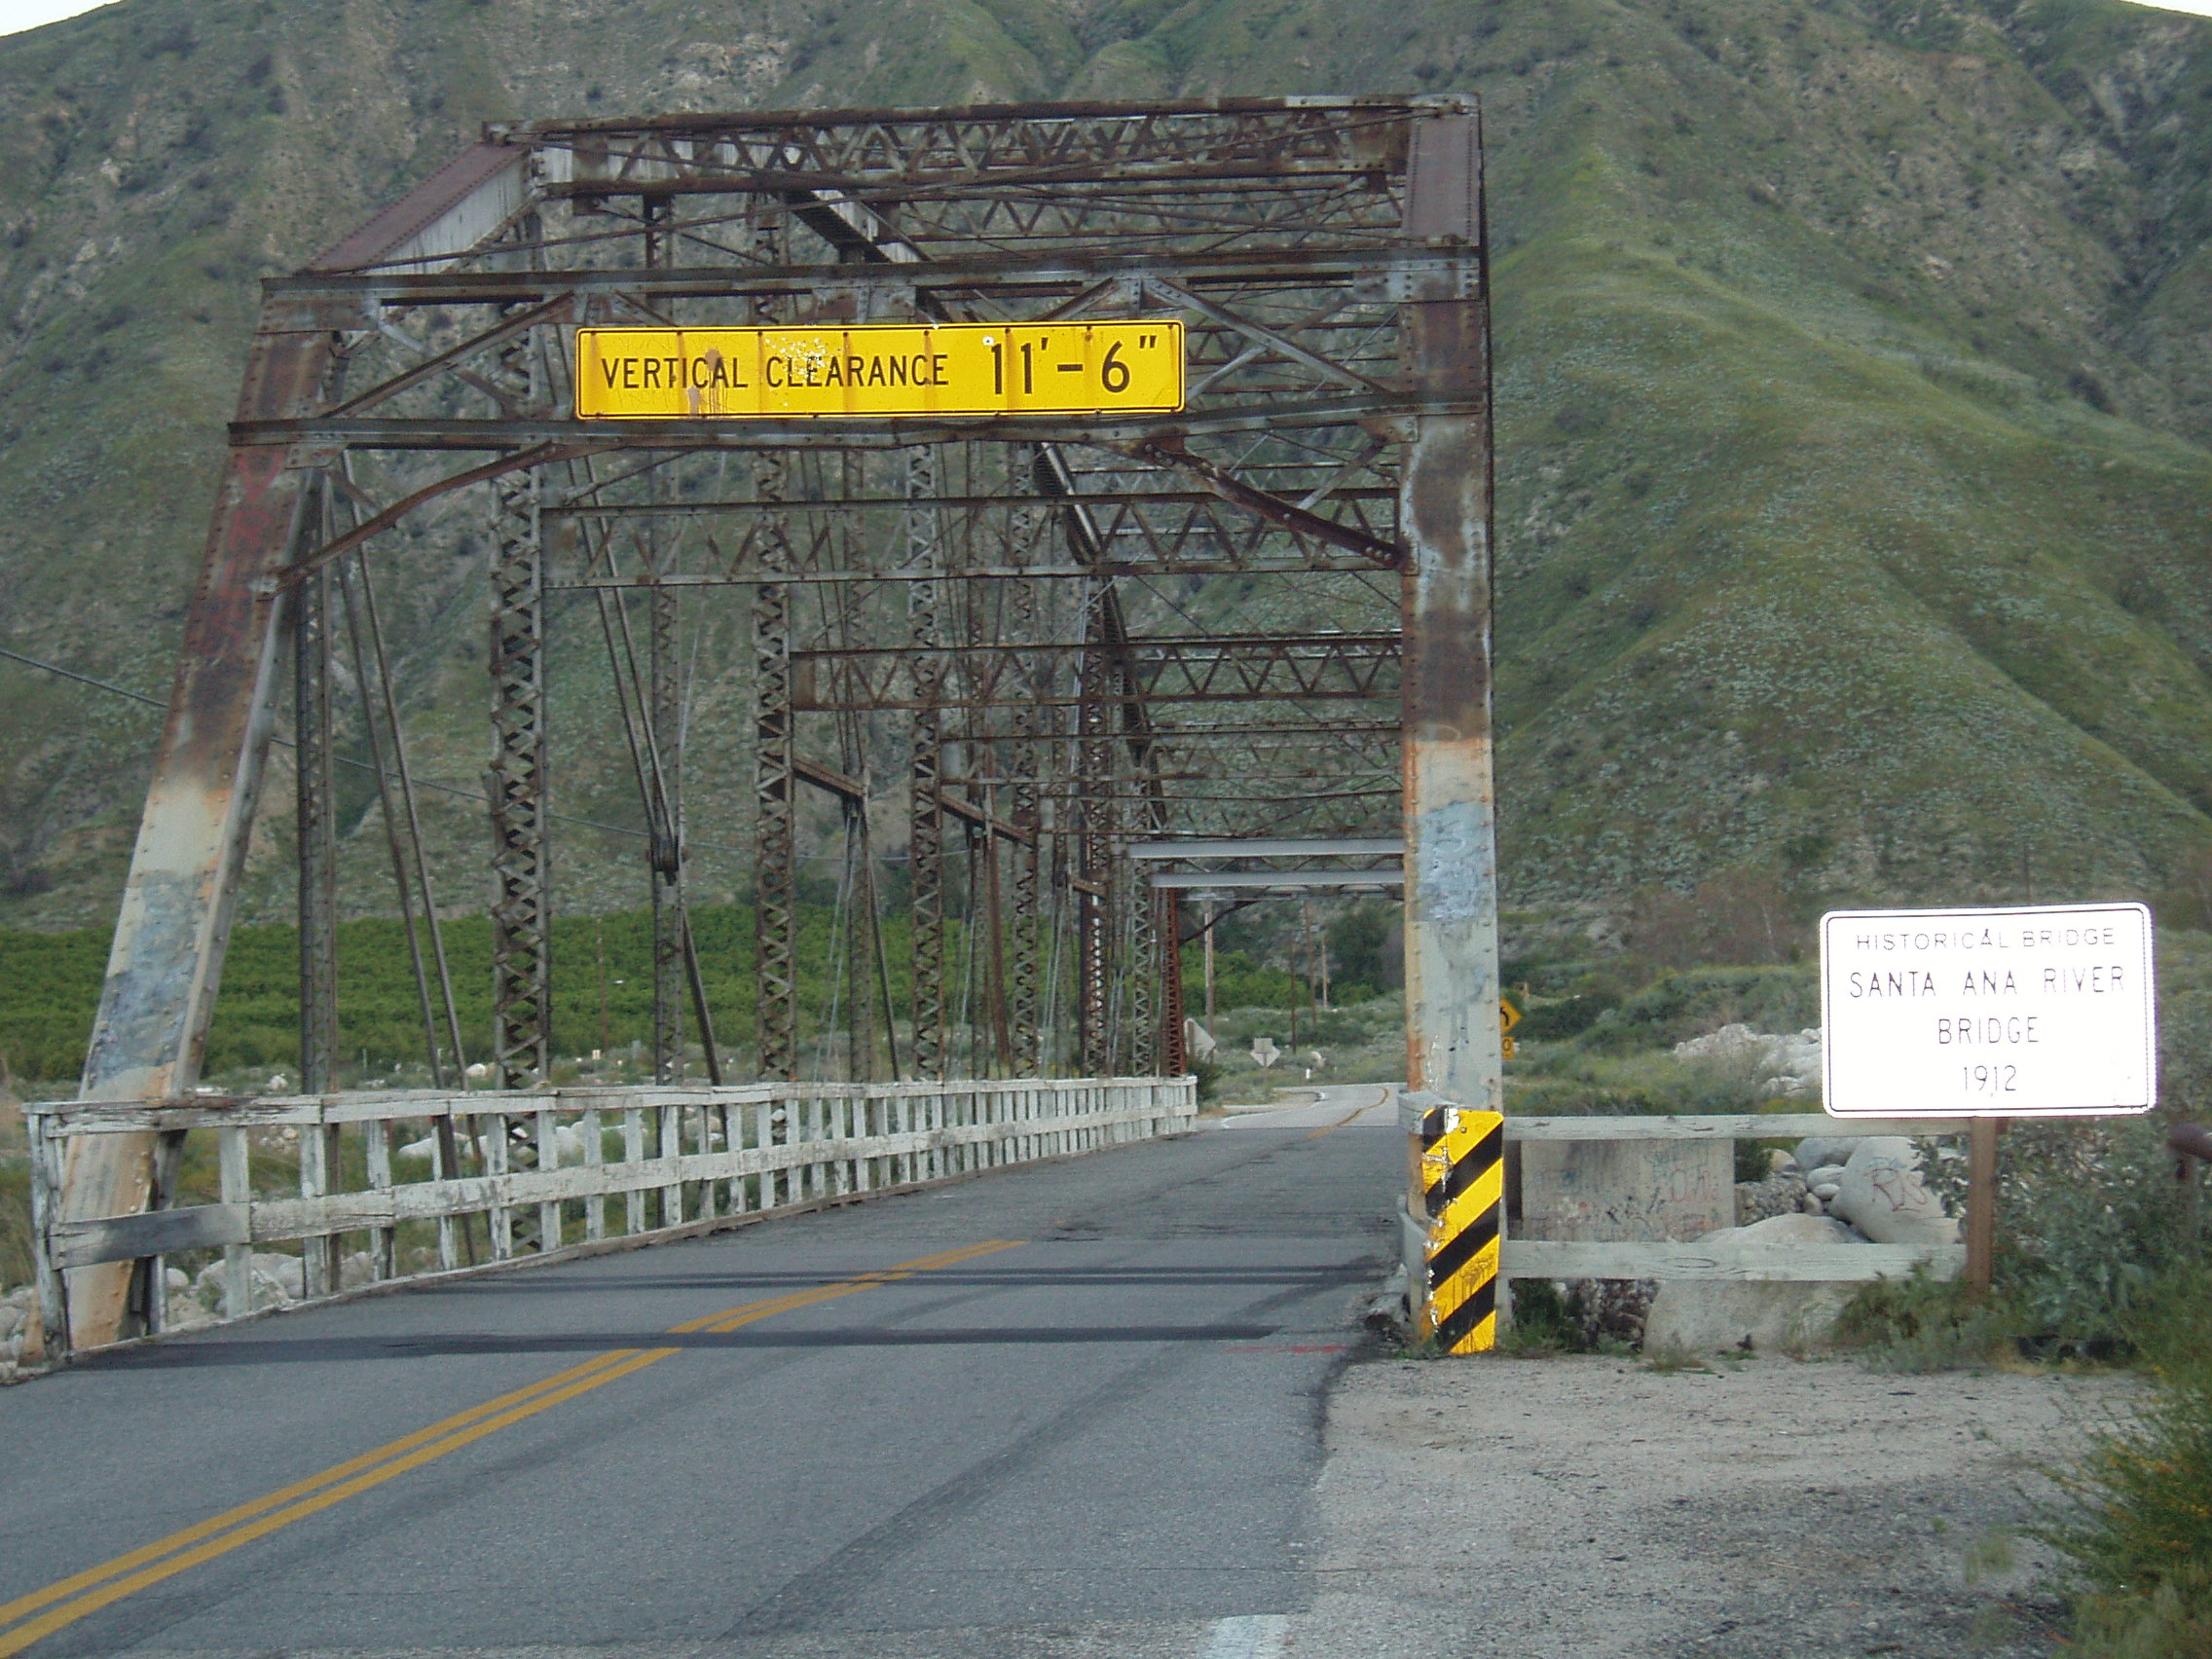 Historic Iron Bridge over the Santa Ana River 1912